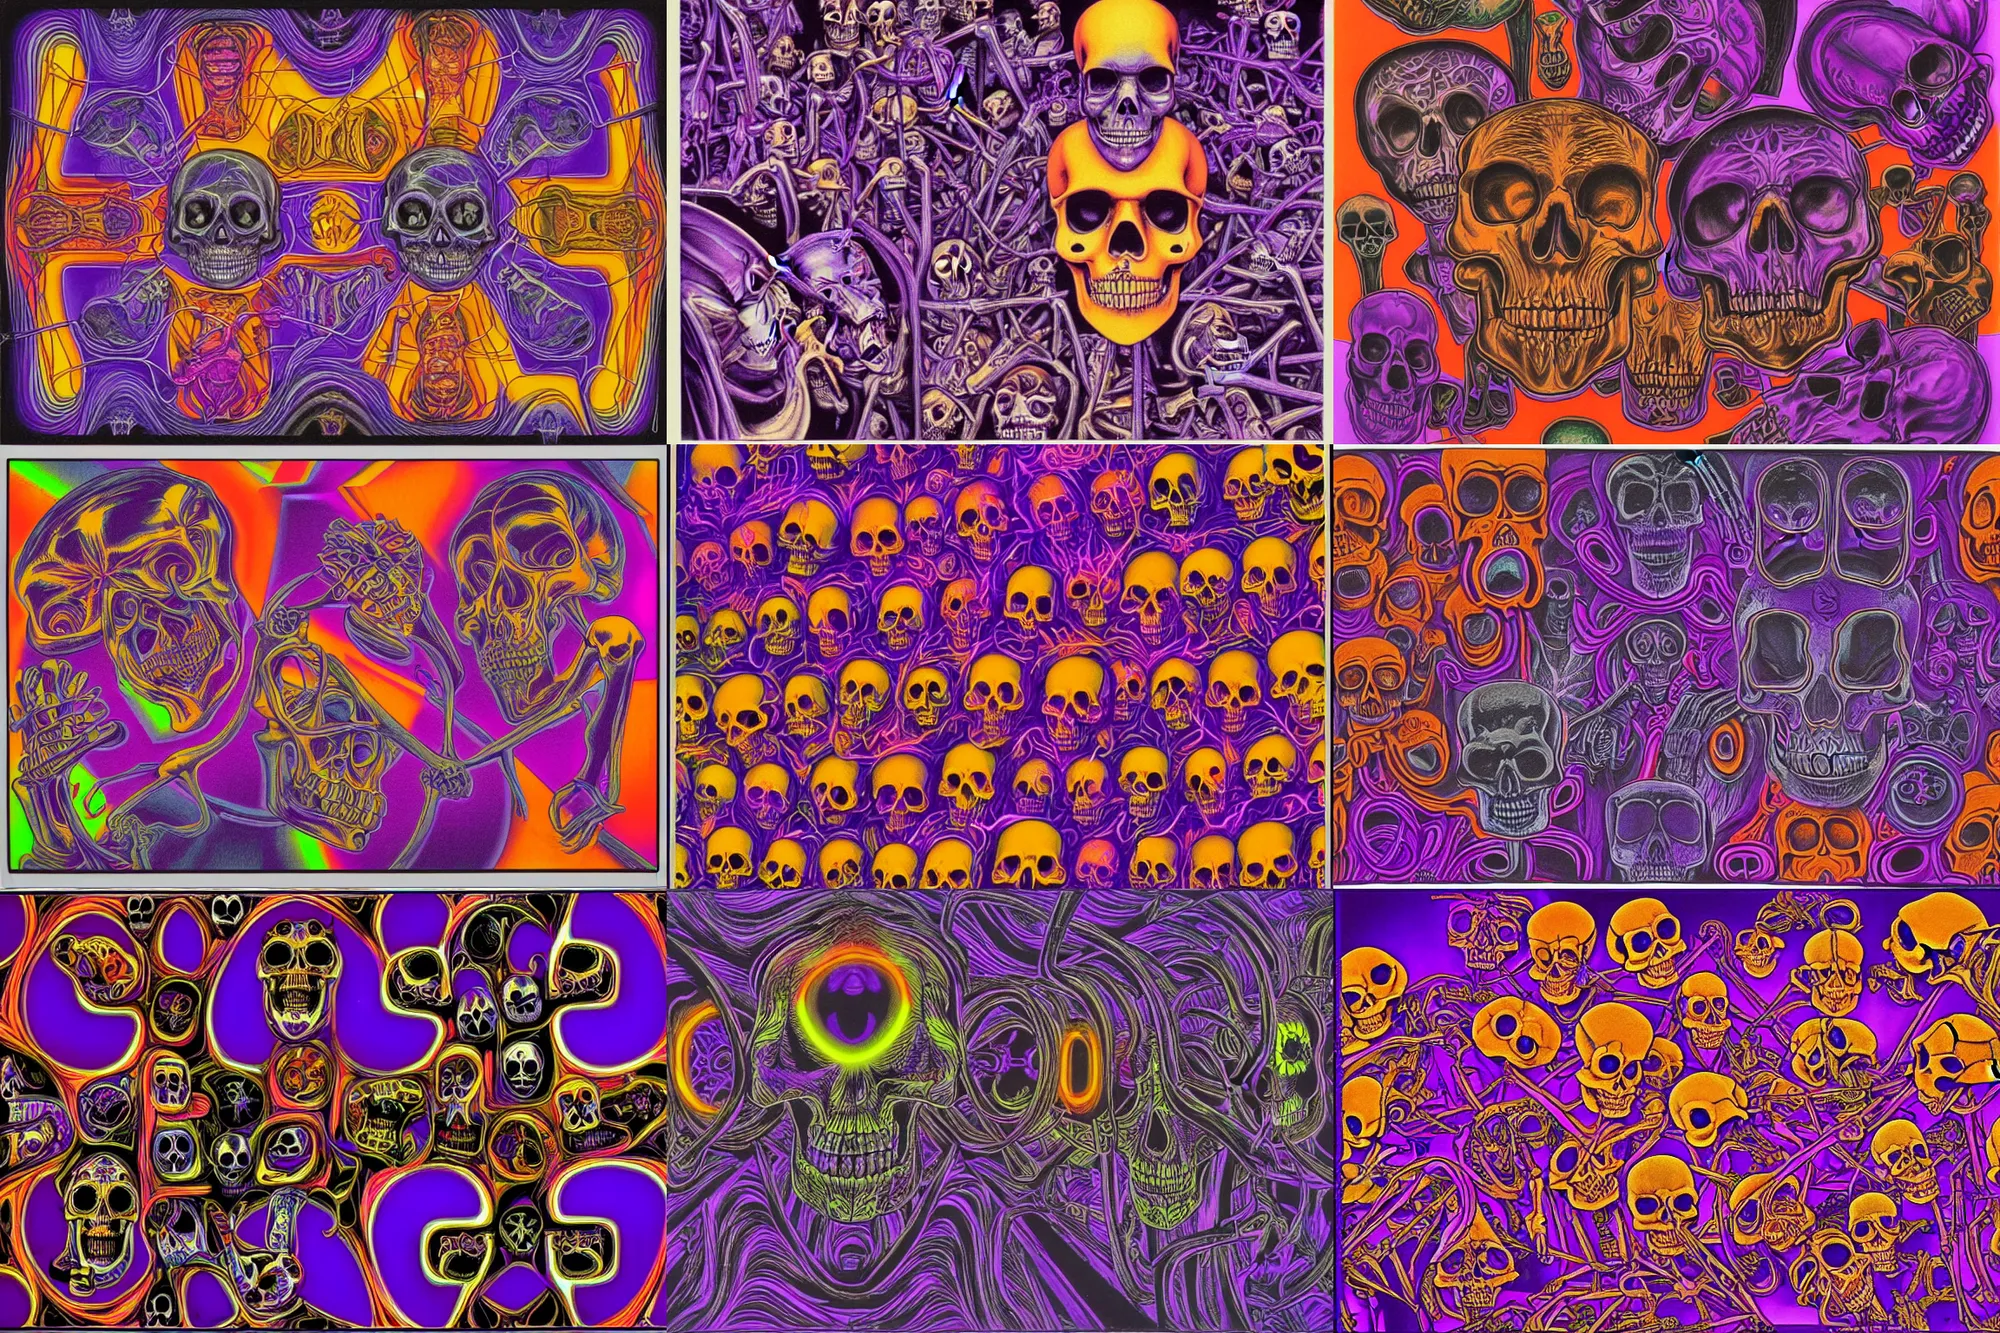 Prompt: skeletons, skulls, bones, neon lights, purple and orange, designed by Escher, artwork by Alex Grey, polaroid photograph